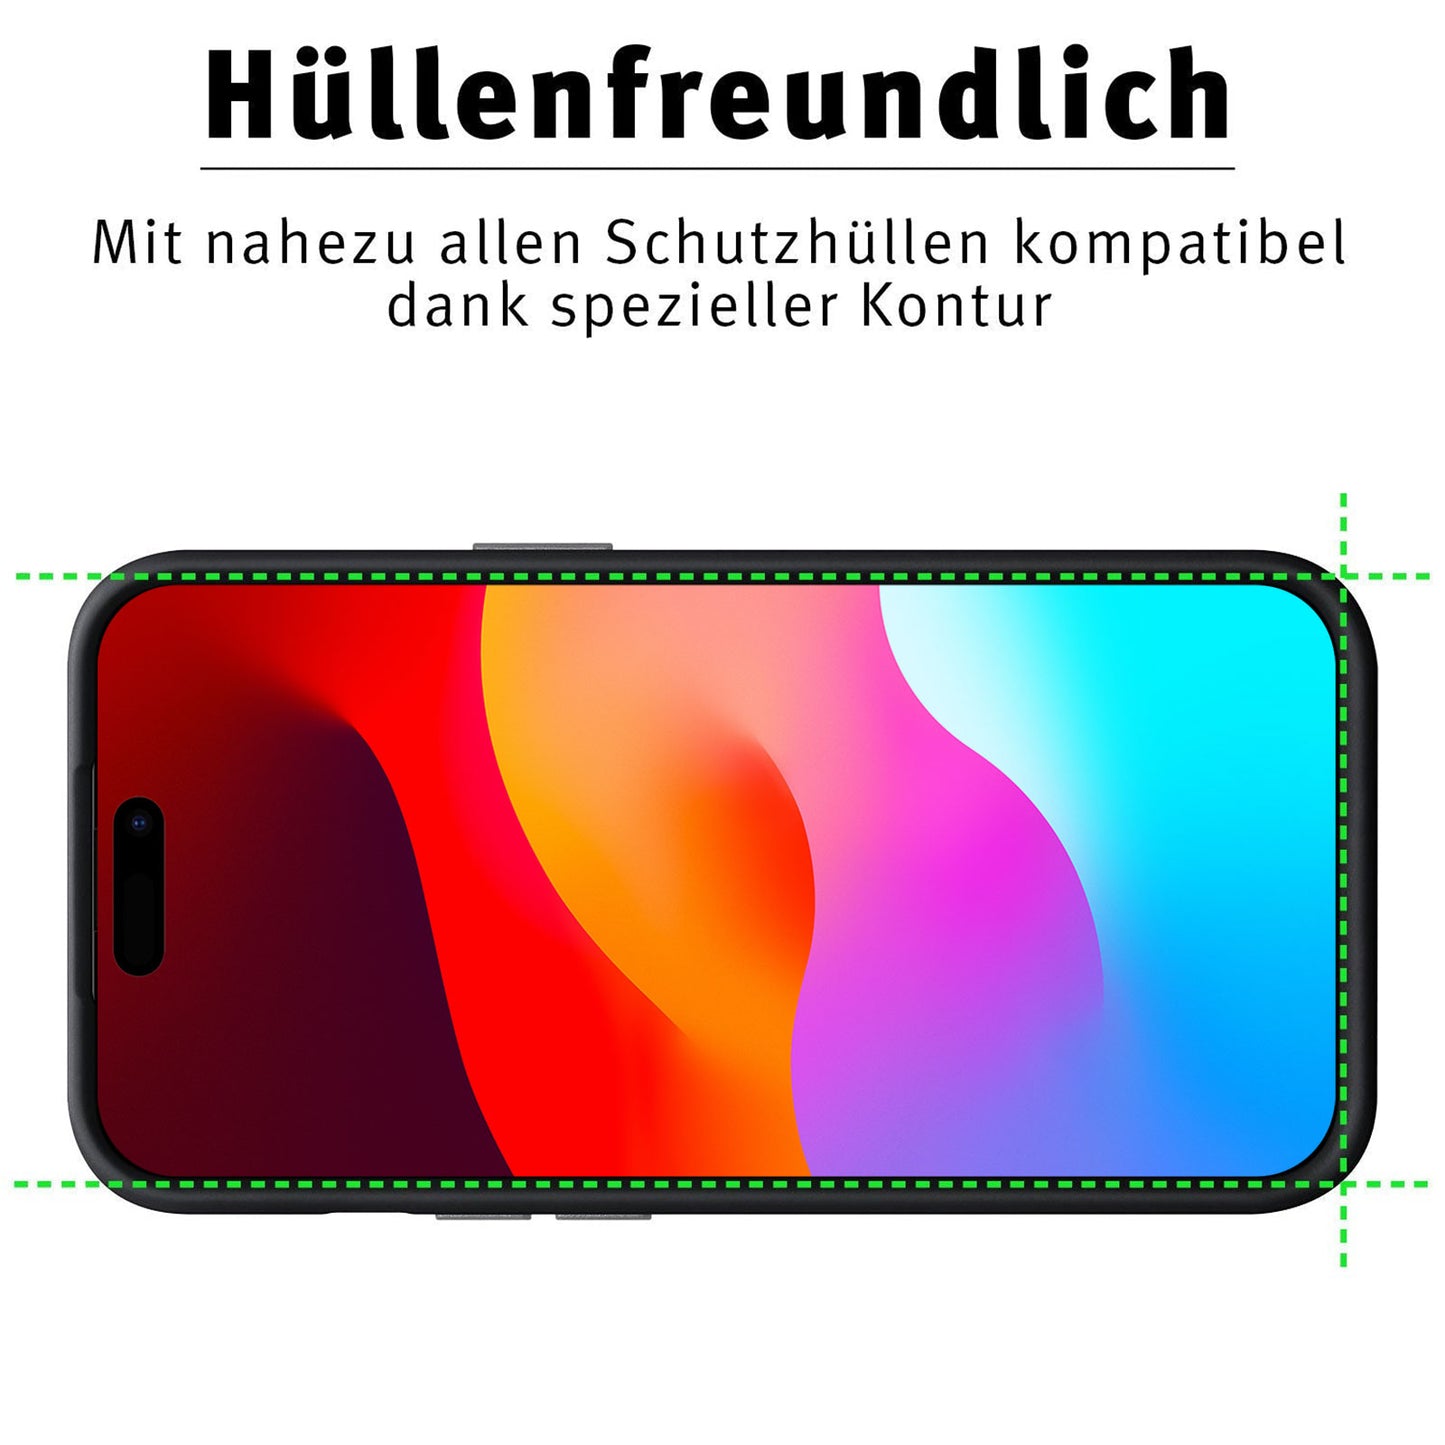 Beastprotect iPhone 15 Pro Schutzfolie HYBRID 3D